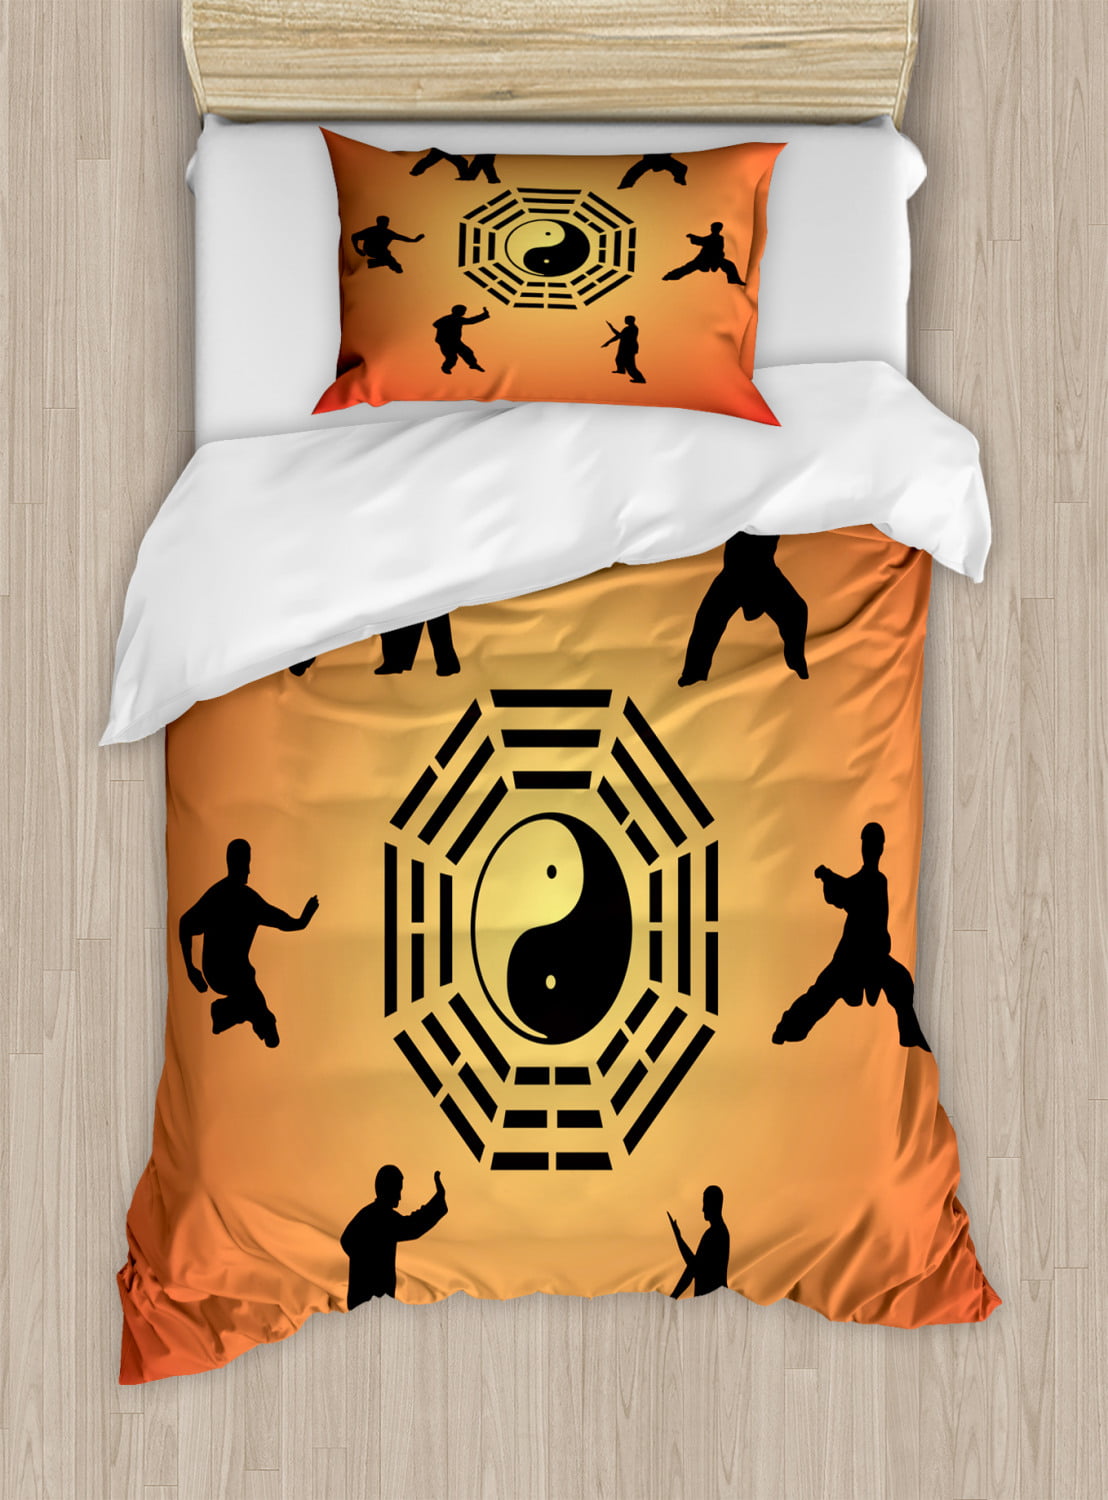 Decorative Bedding Set, Karate Duvet Cover